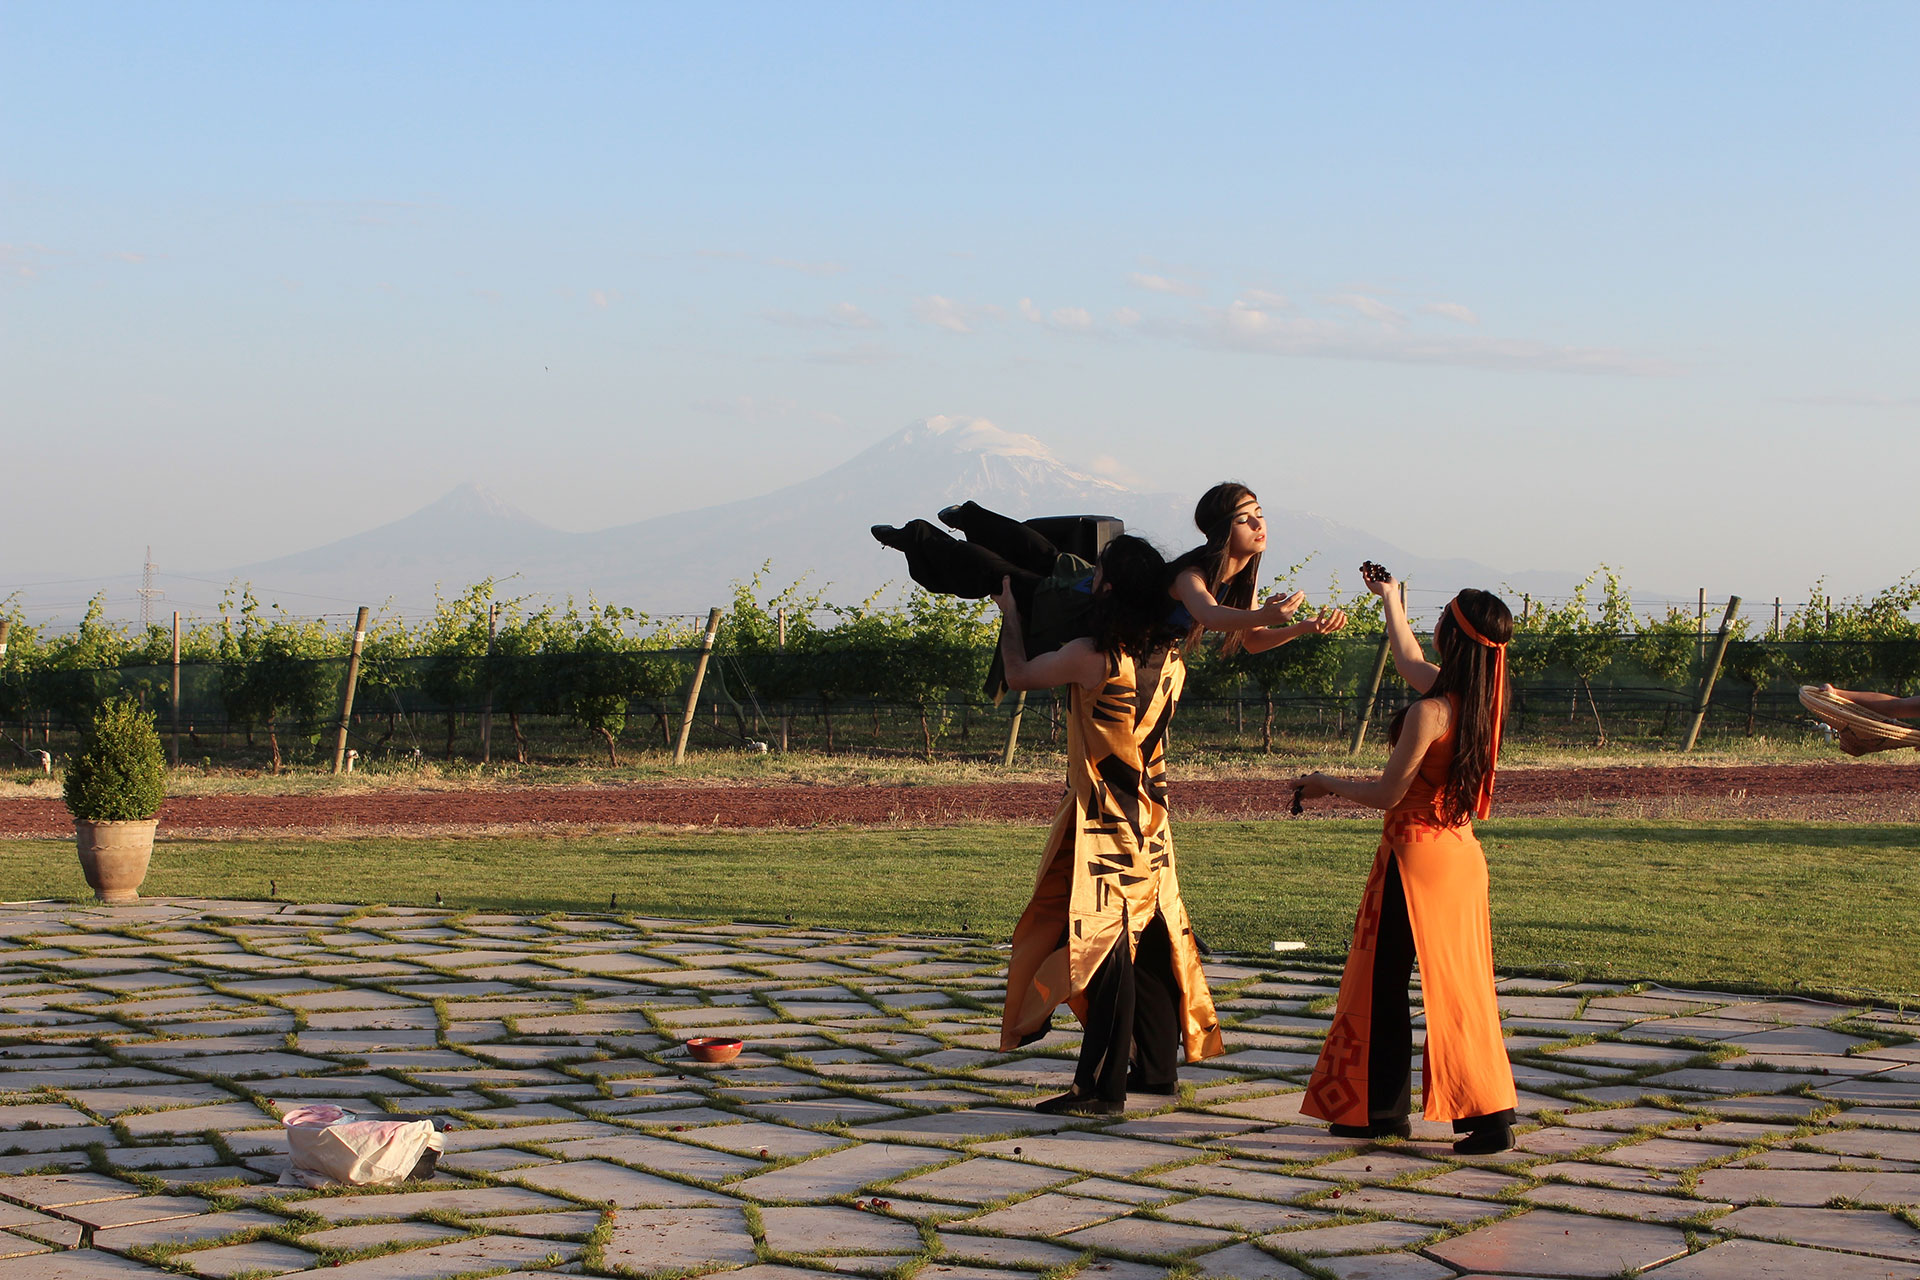 “The Soul of Wine” - a modern dance premiere at Van Ardi winery